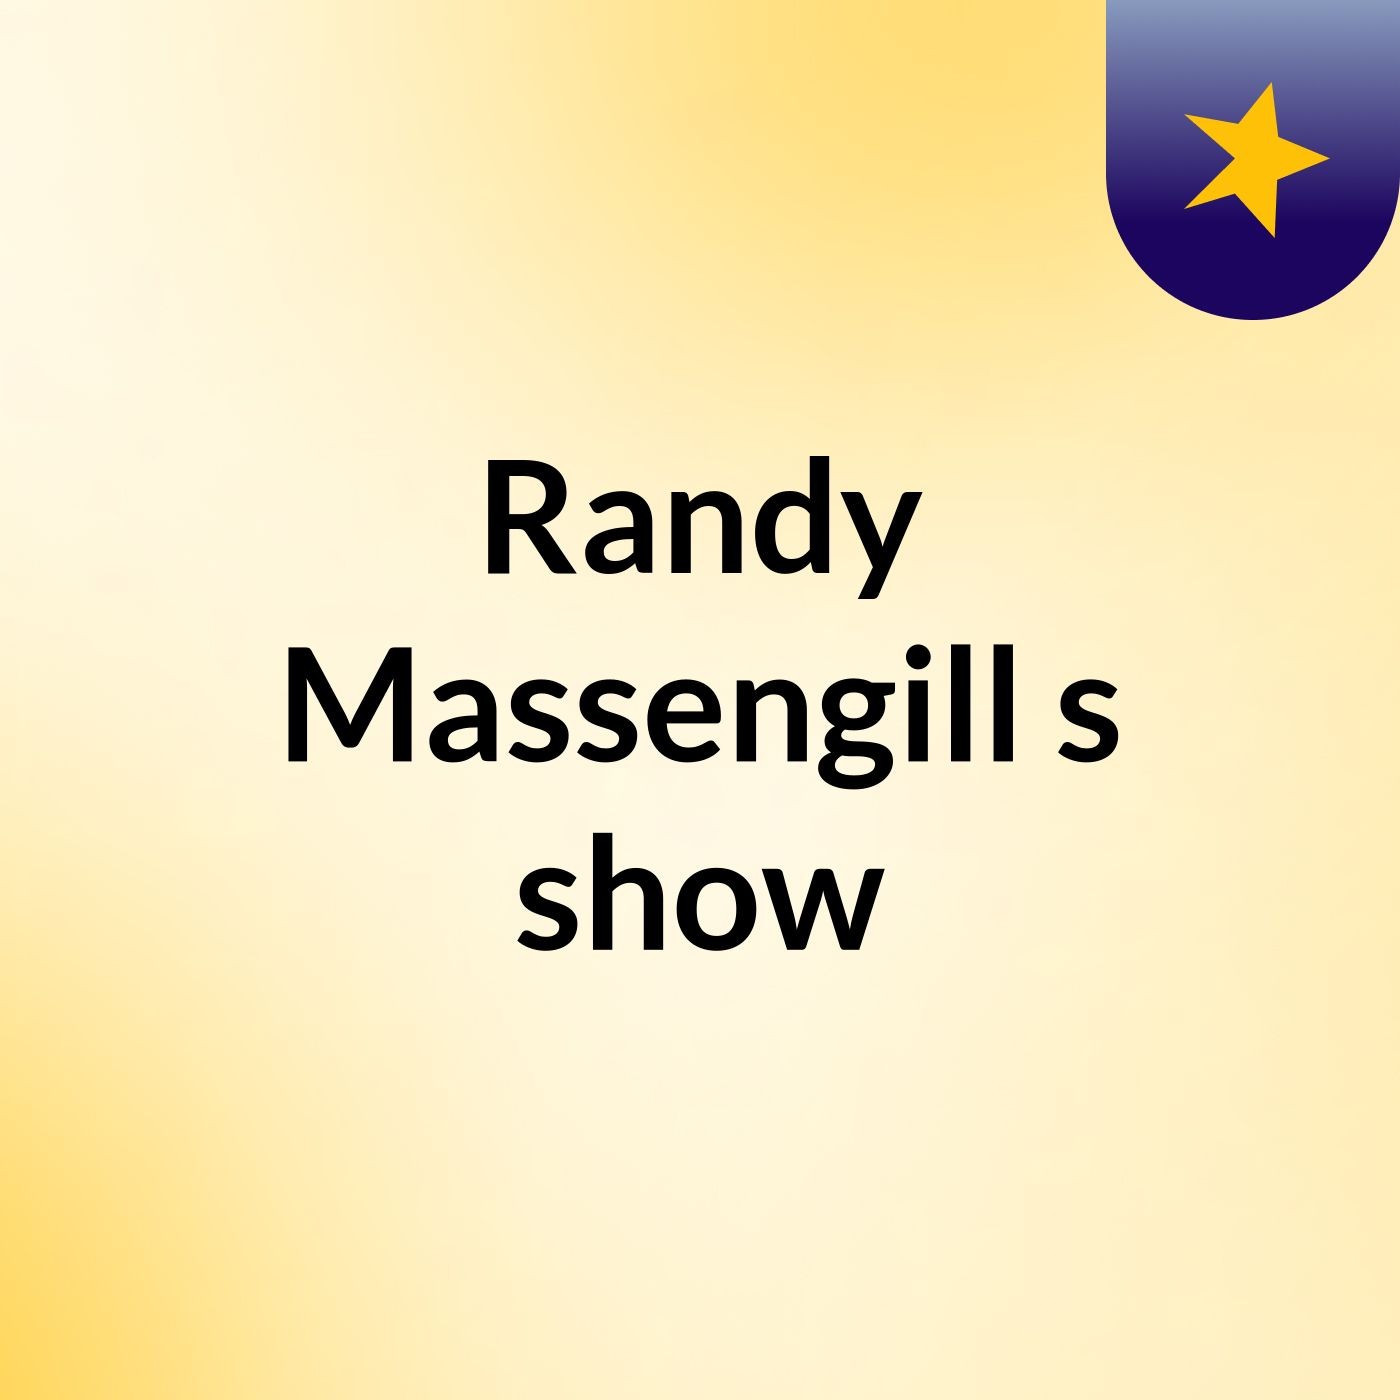 Randy Massengill's show